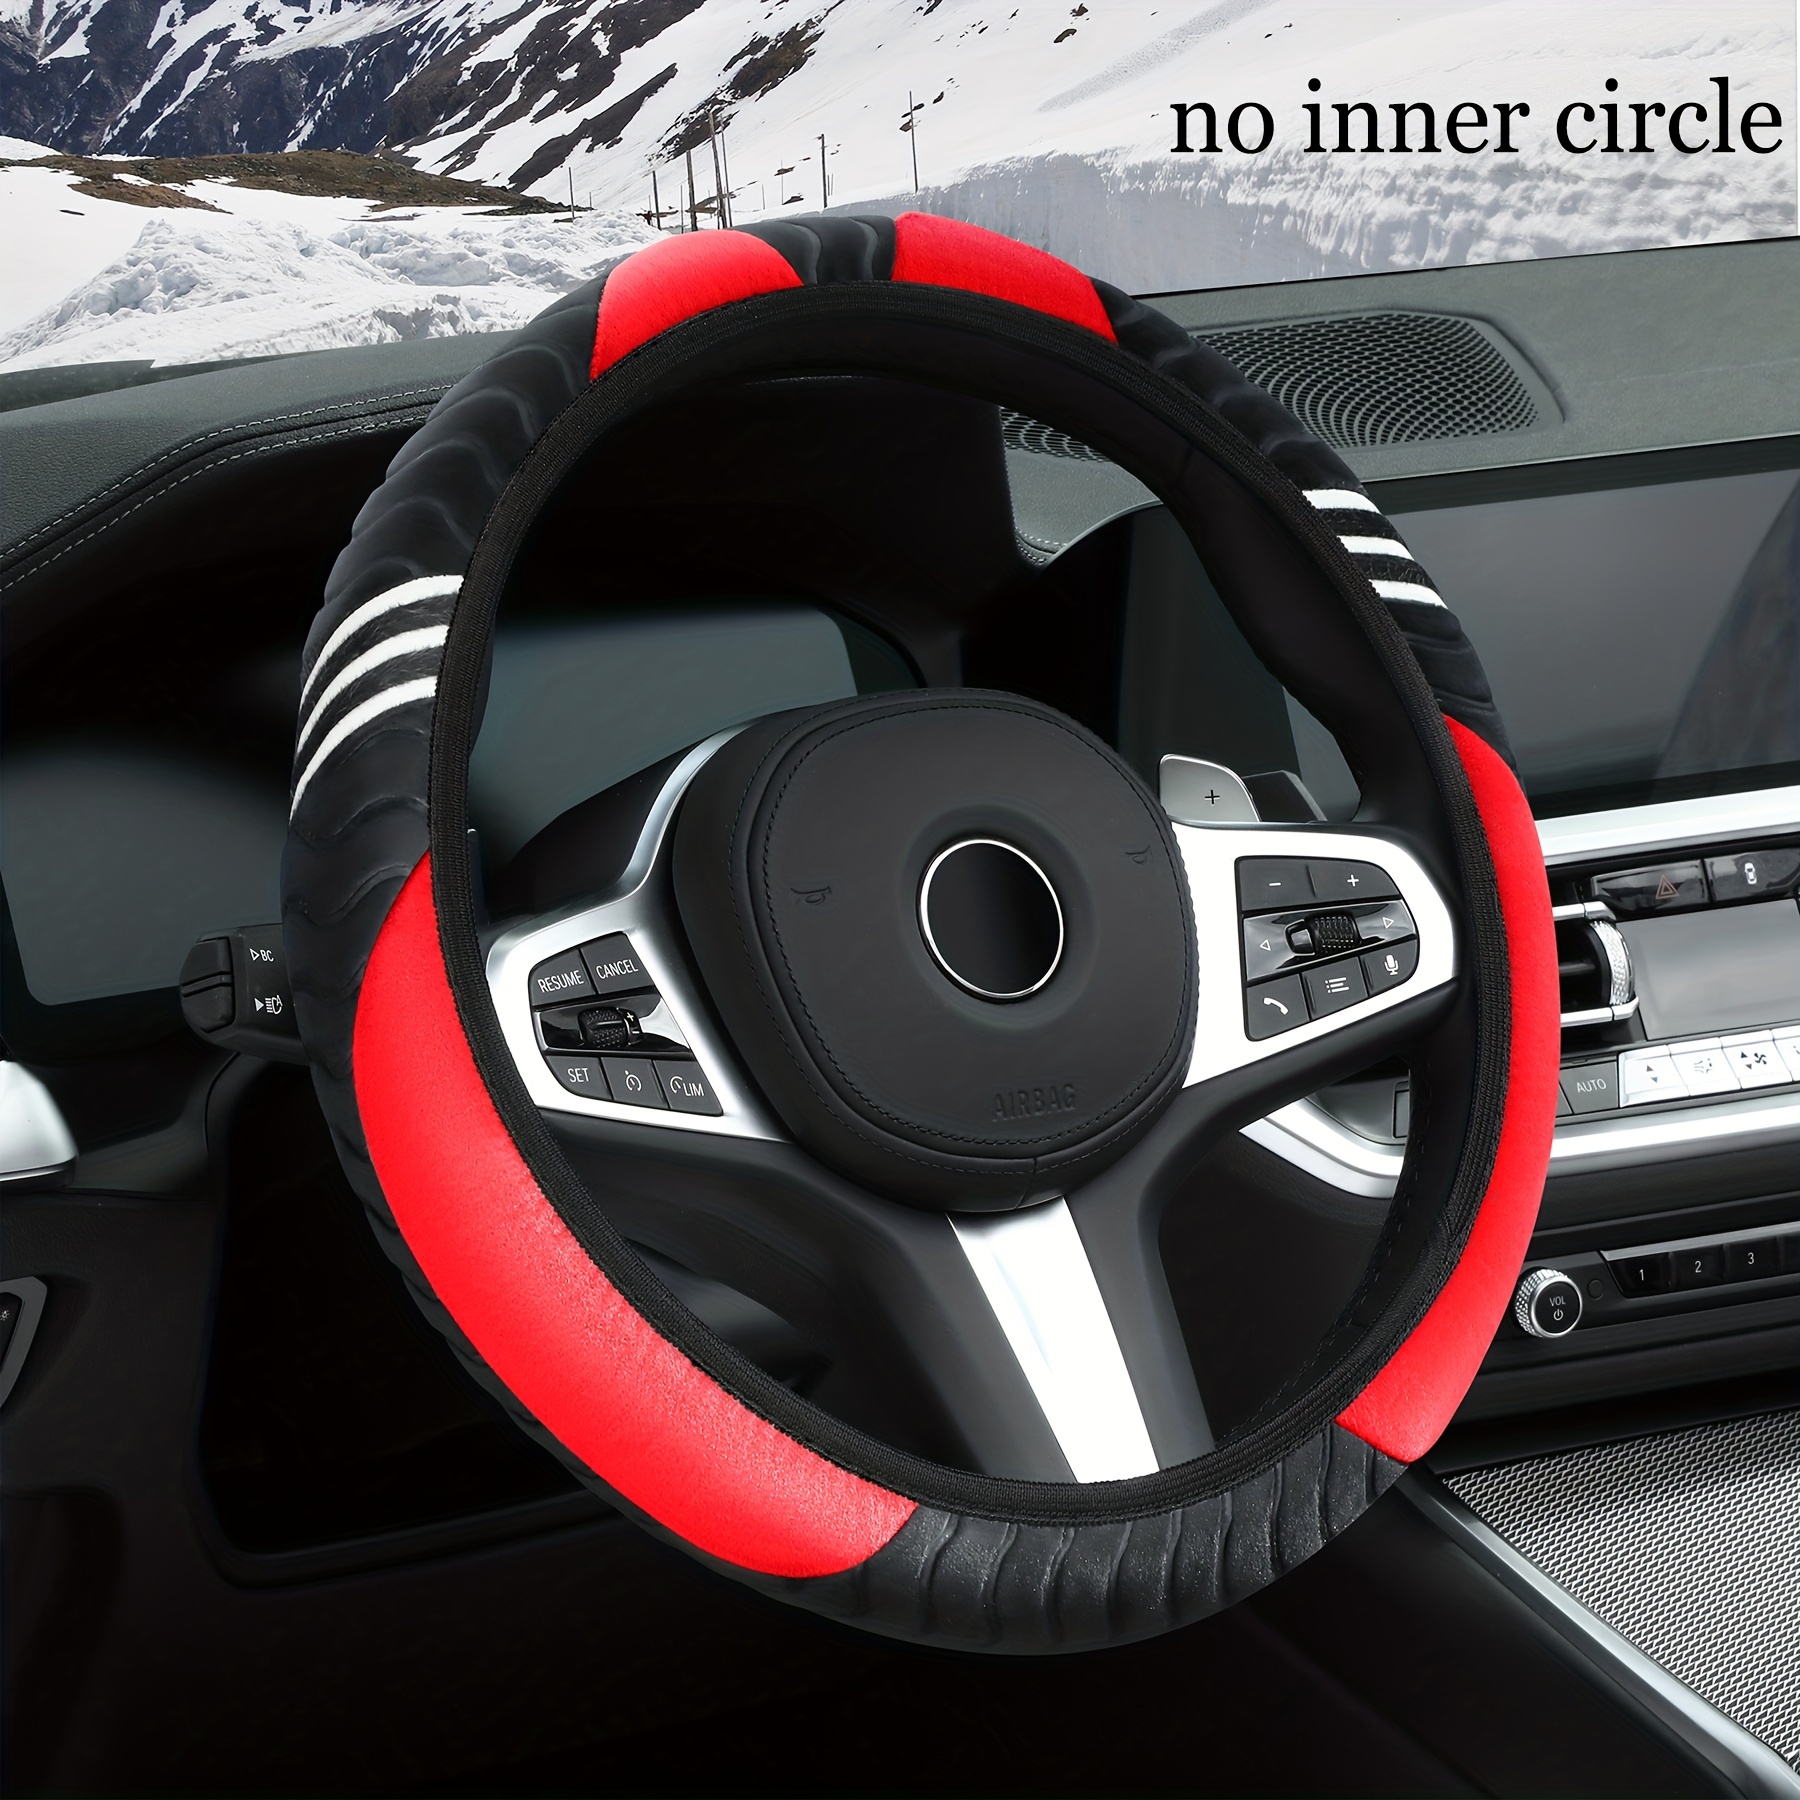 Cute Car Accessories Interior Car Decor Steering Wheel Cover